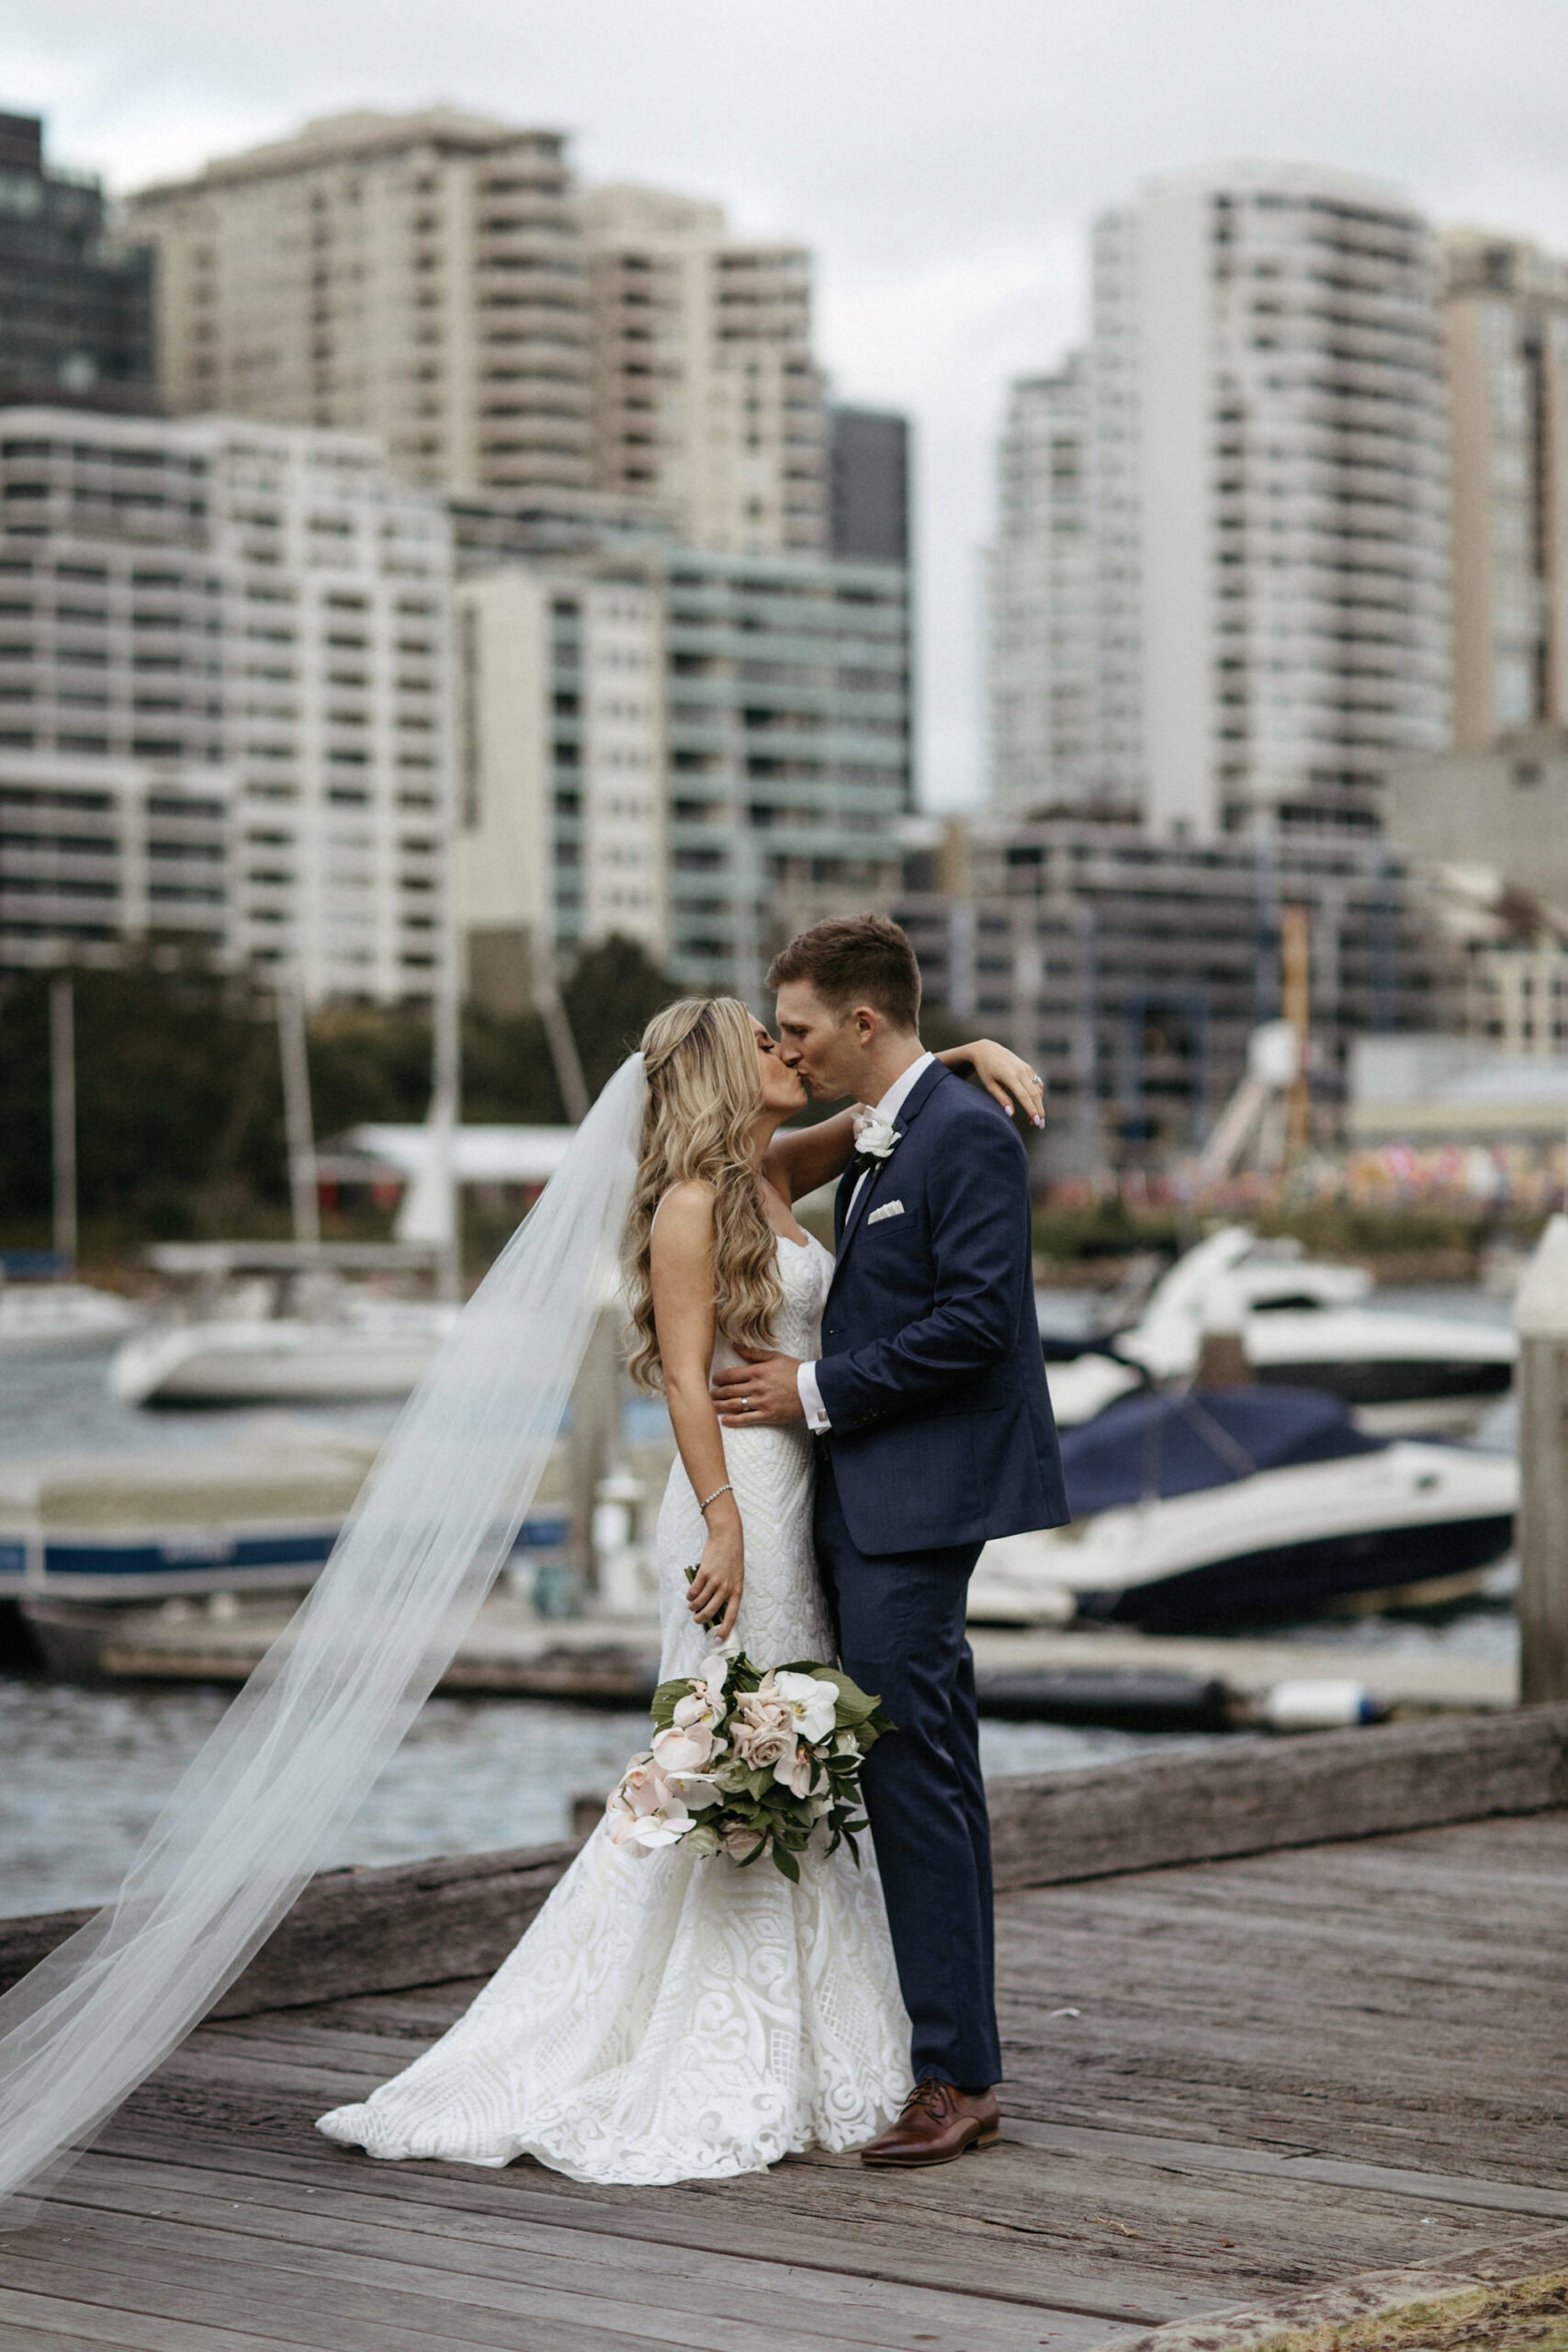 Olivia Mitch Romantic Harbour Wedding Dan Evans Photography 048 scaled